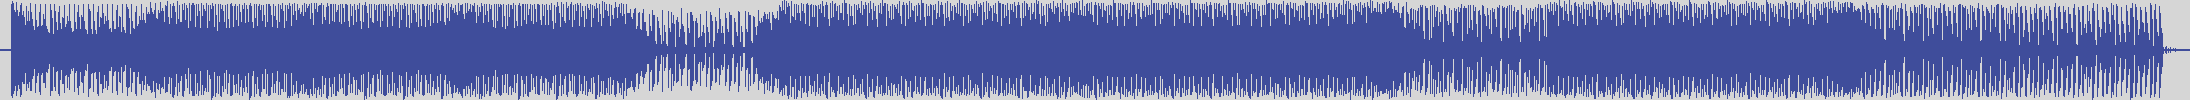 nf_boyz_records [NFY050] Cobra Cabin - Decoupage [D-tech Mix] audio wave form